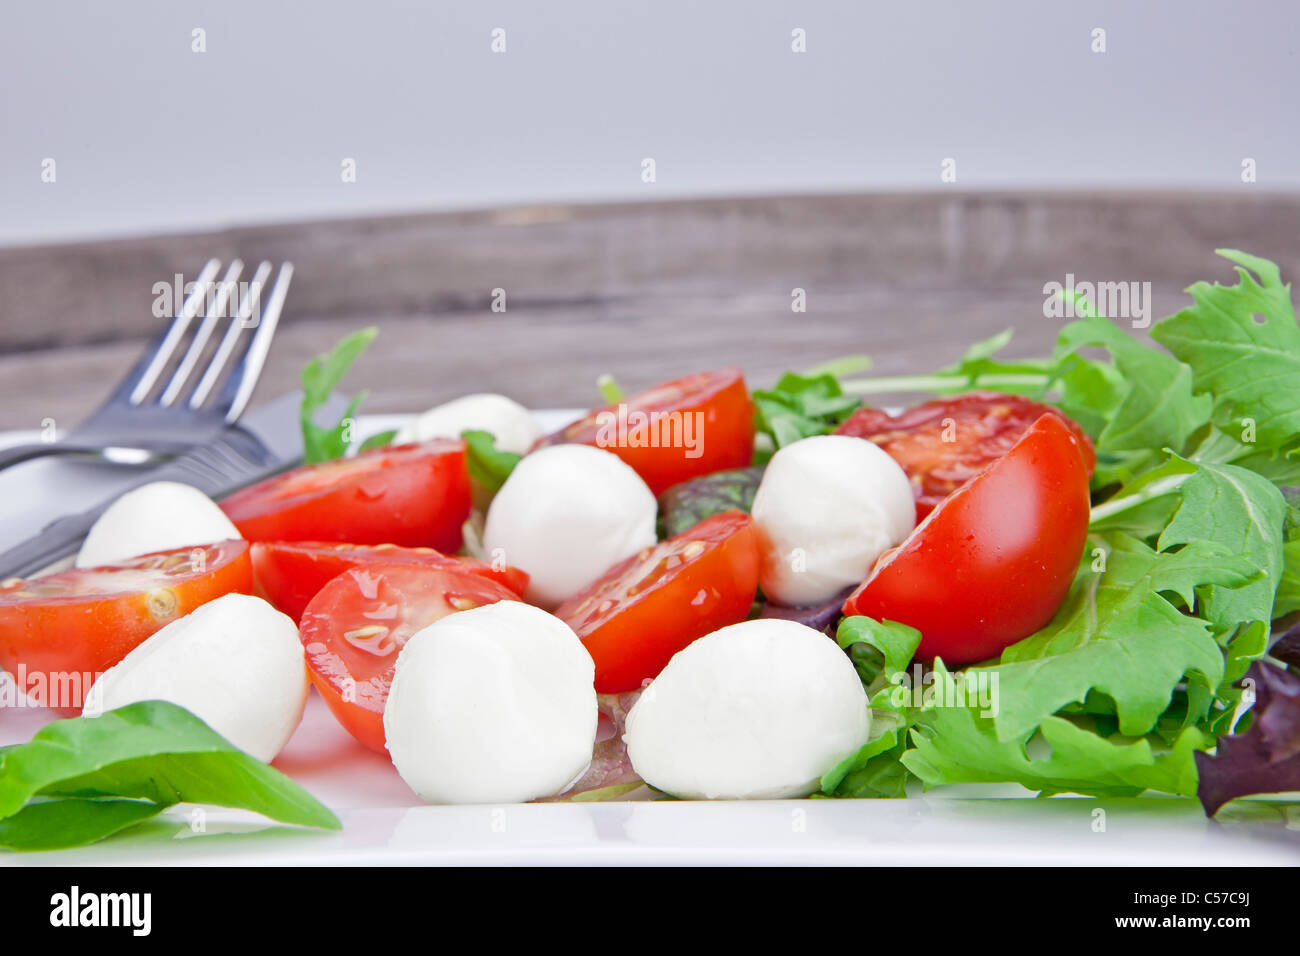 Tomato and mozzarella with lettuce on a white plate Stock Photo